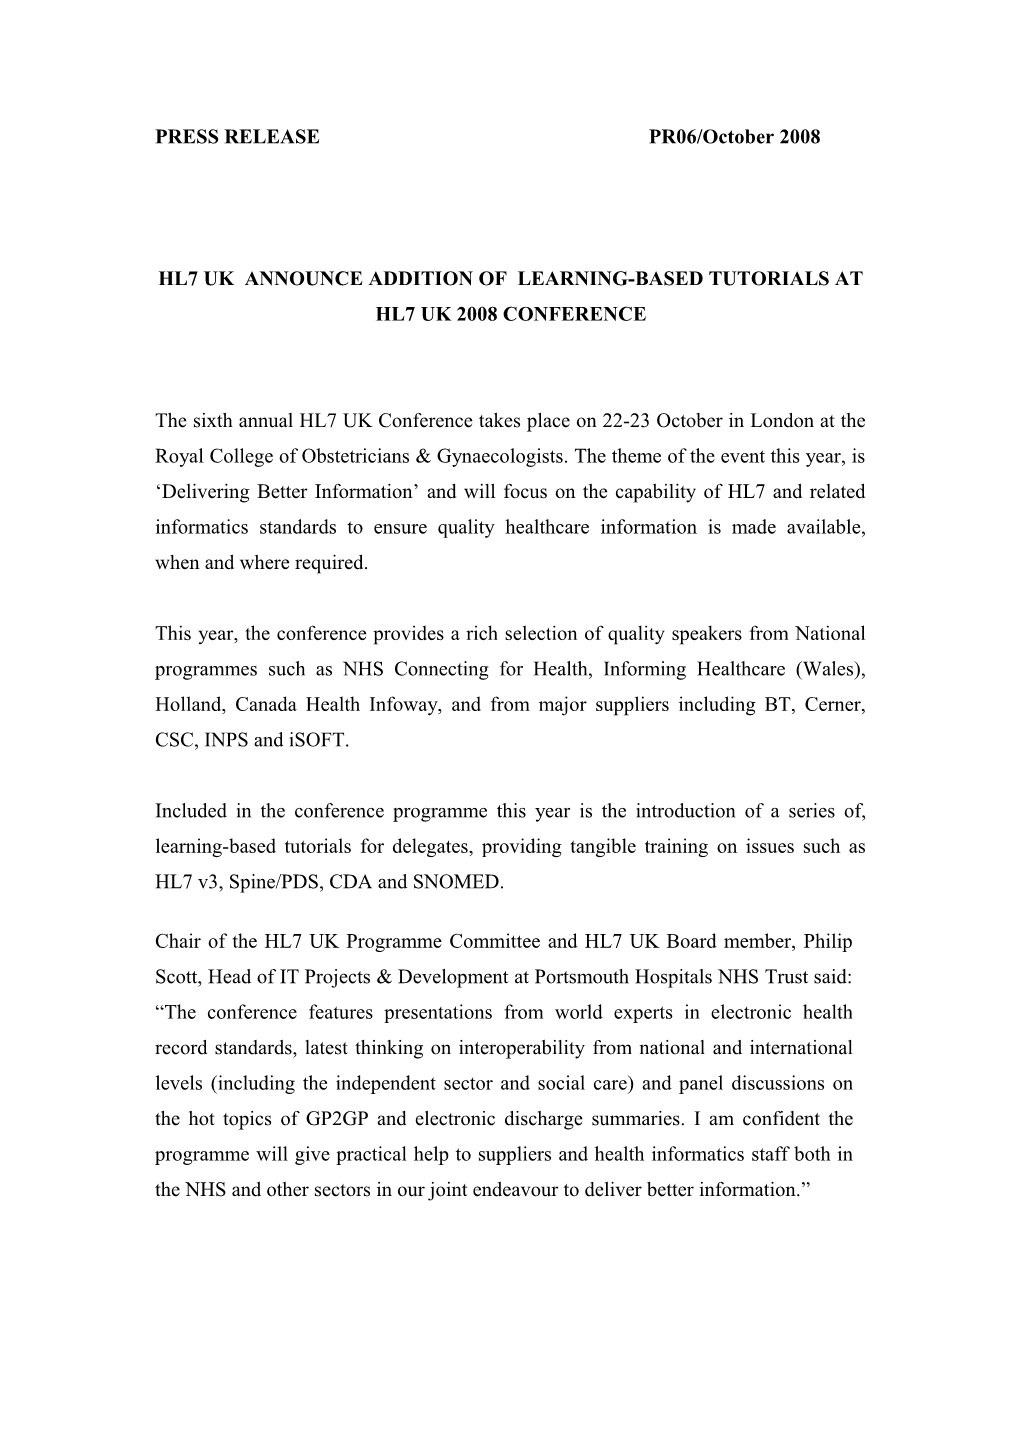 Hl7 Uk Announce Addition of Learning-Based Tutorials at Hl7 Uk 2008 Conference